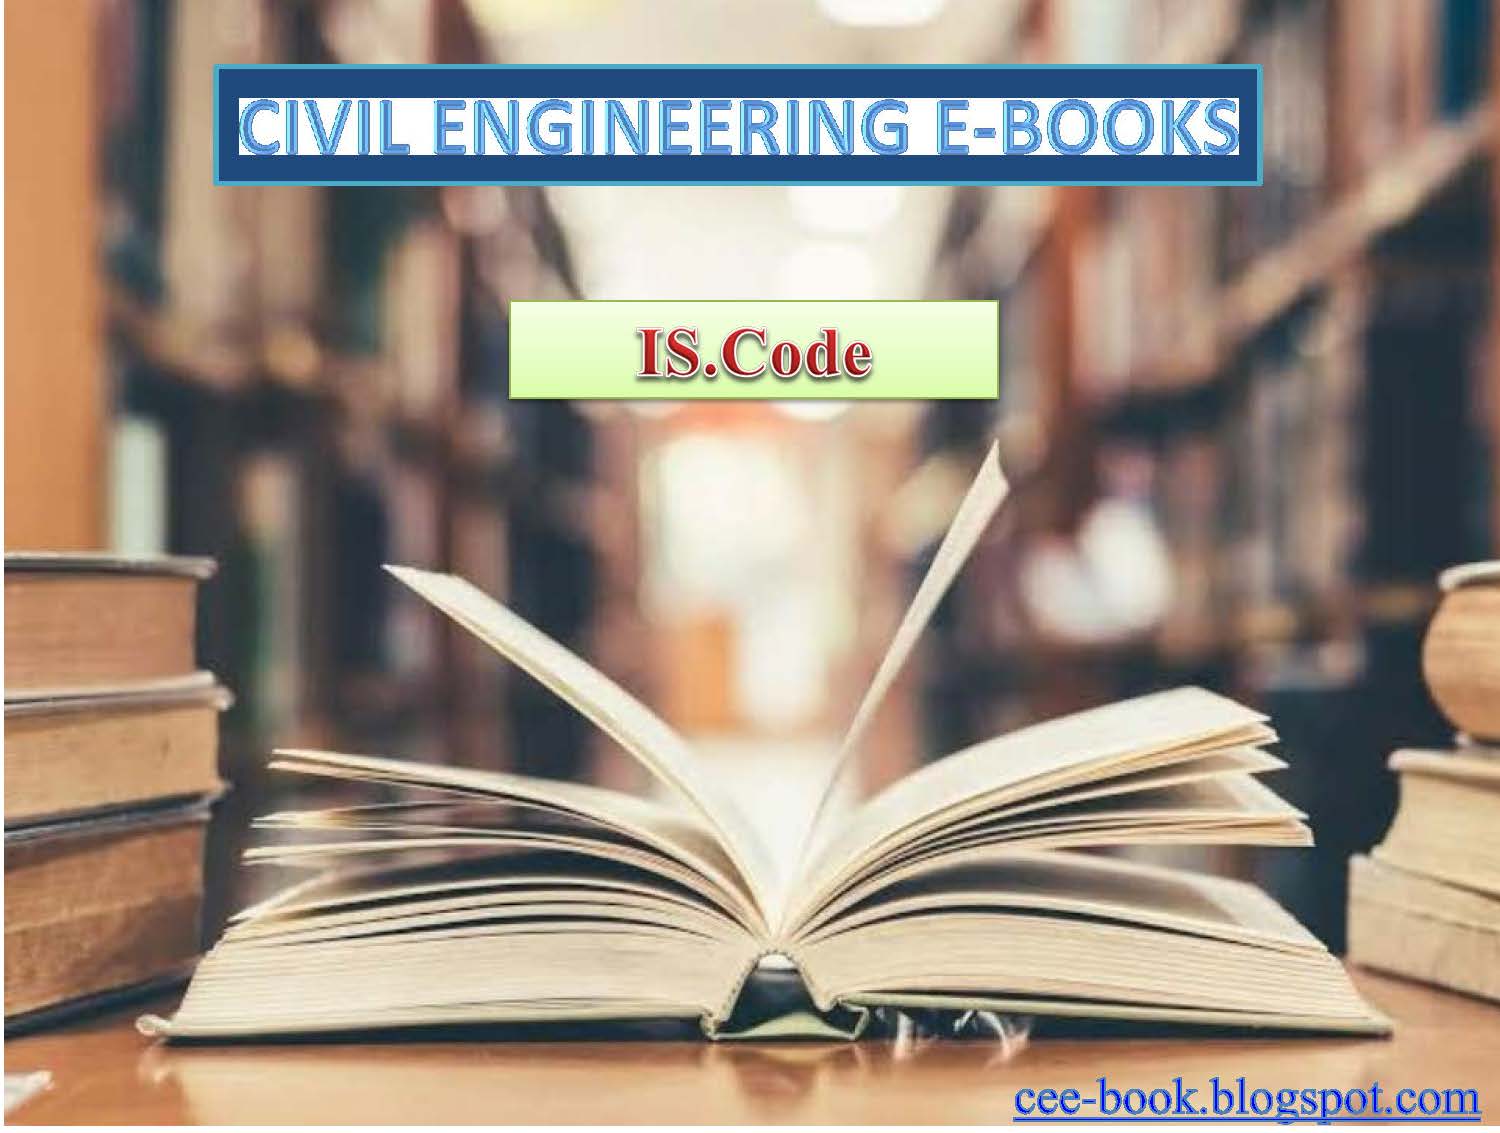 IS Code for Concrete - CIVIL ENGINEERING E-BOOKS